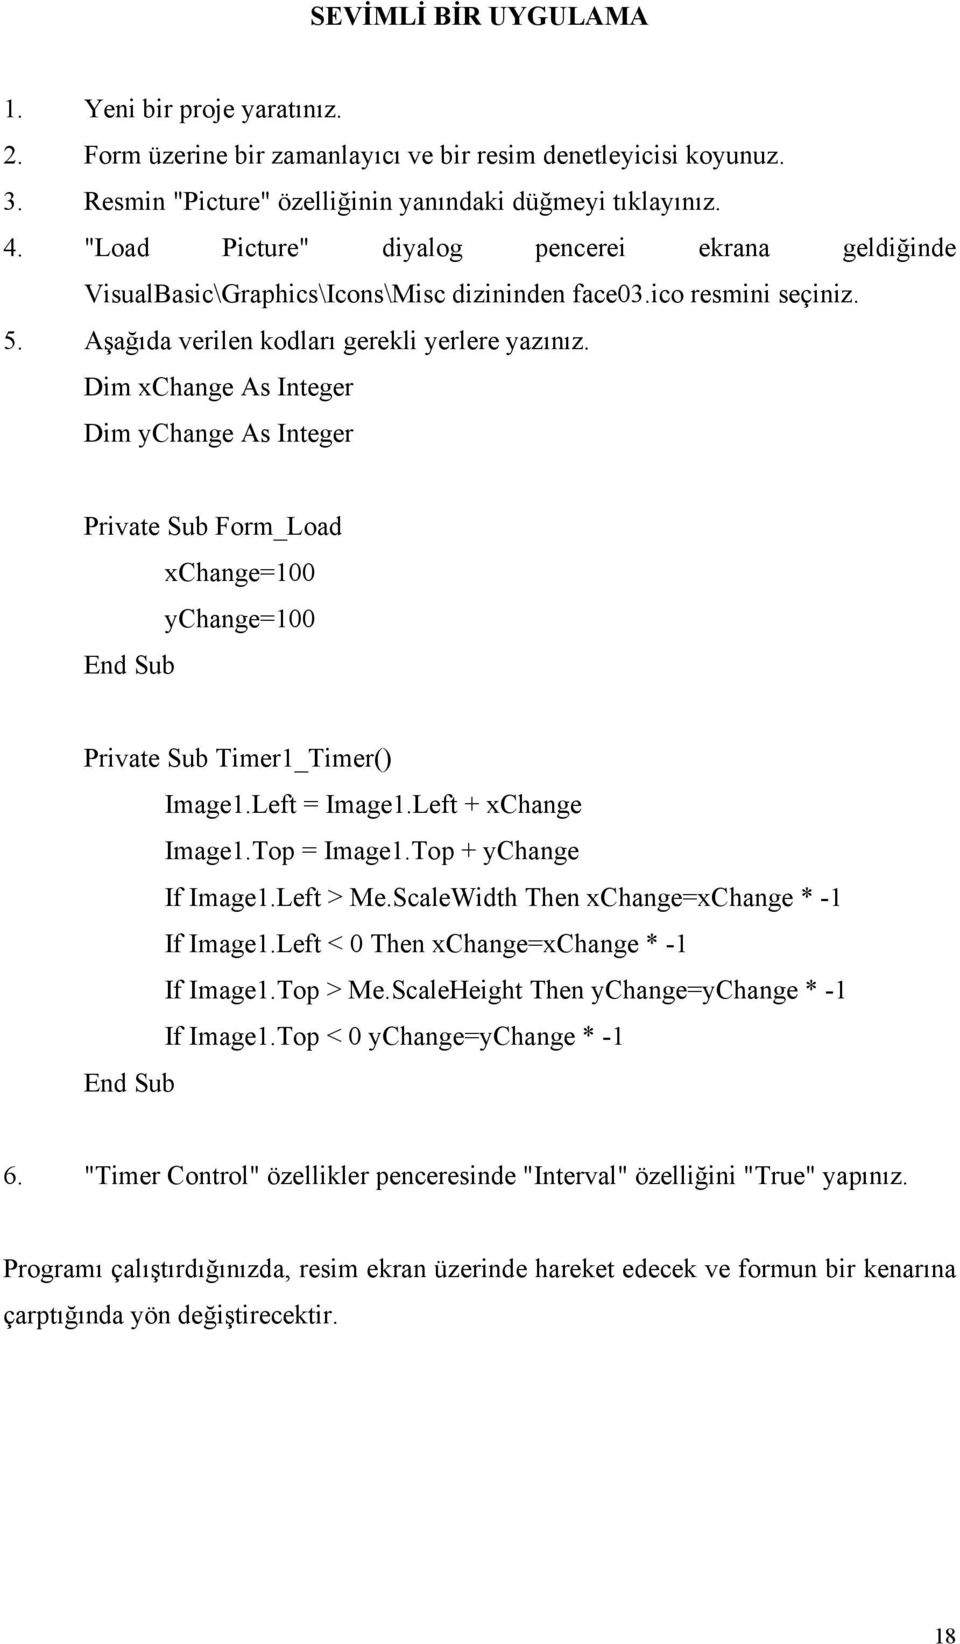 Dim xchange As Integer Dim ychange As Integer Private Sub Form_Load xchange=100 ychange=100 Private Sub Timer1_Timer() Image1.Left = Image1.Left + xchange Image1.Top = Image1.Top + ychange If Image1.